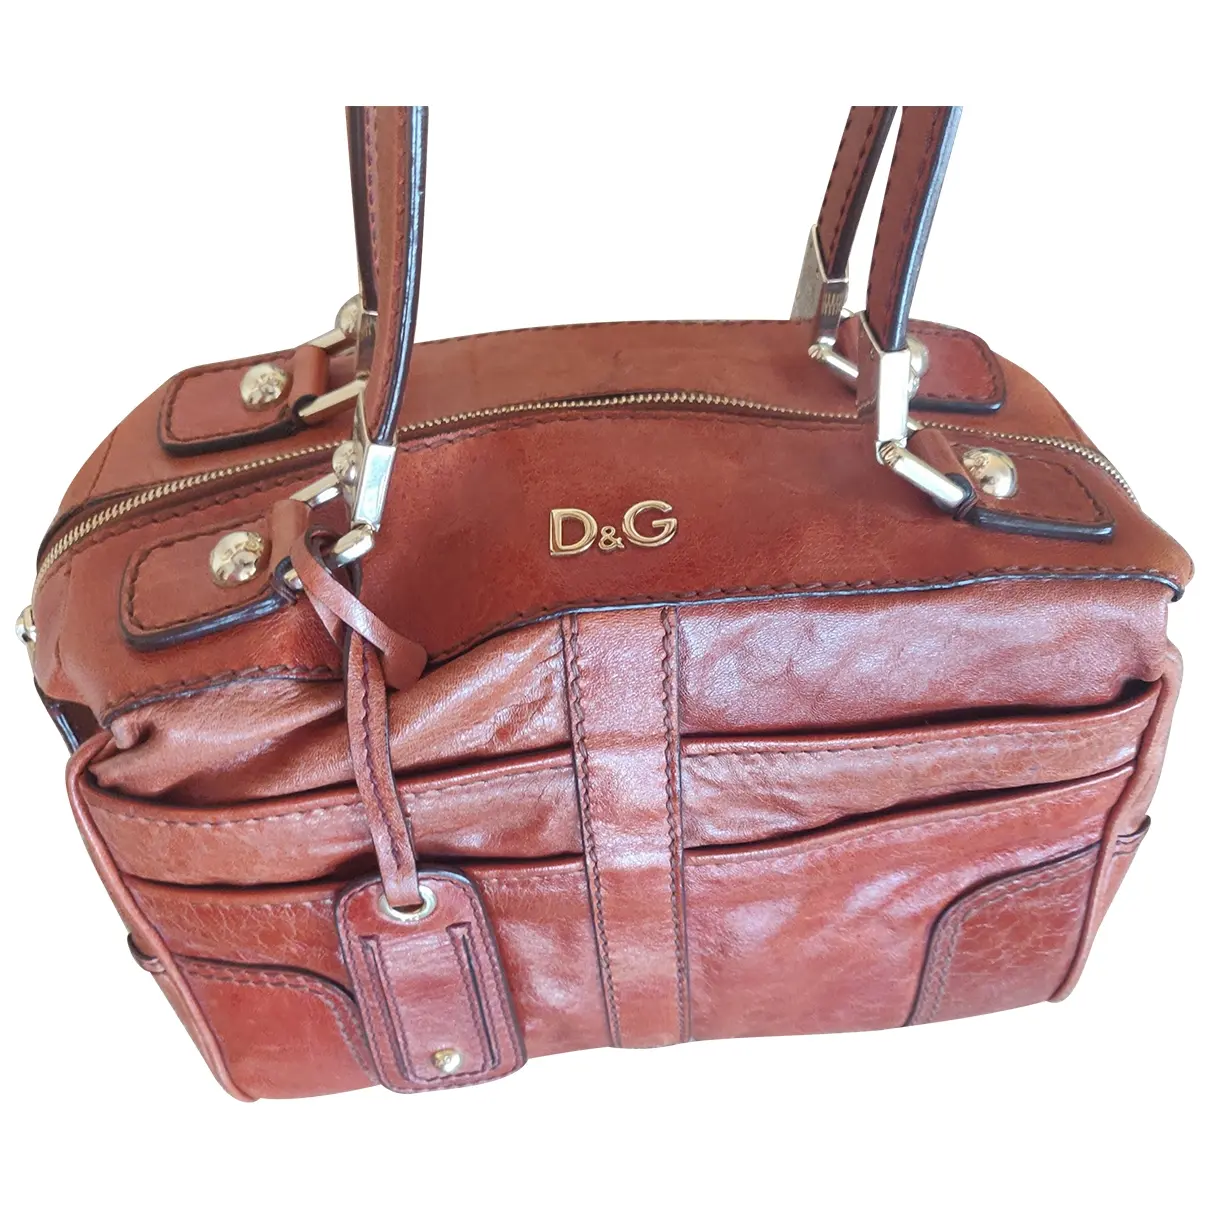 Patent leather bag D&G